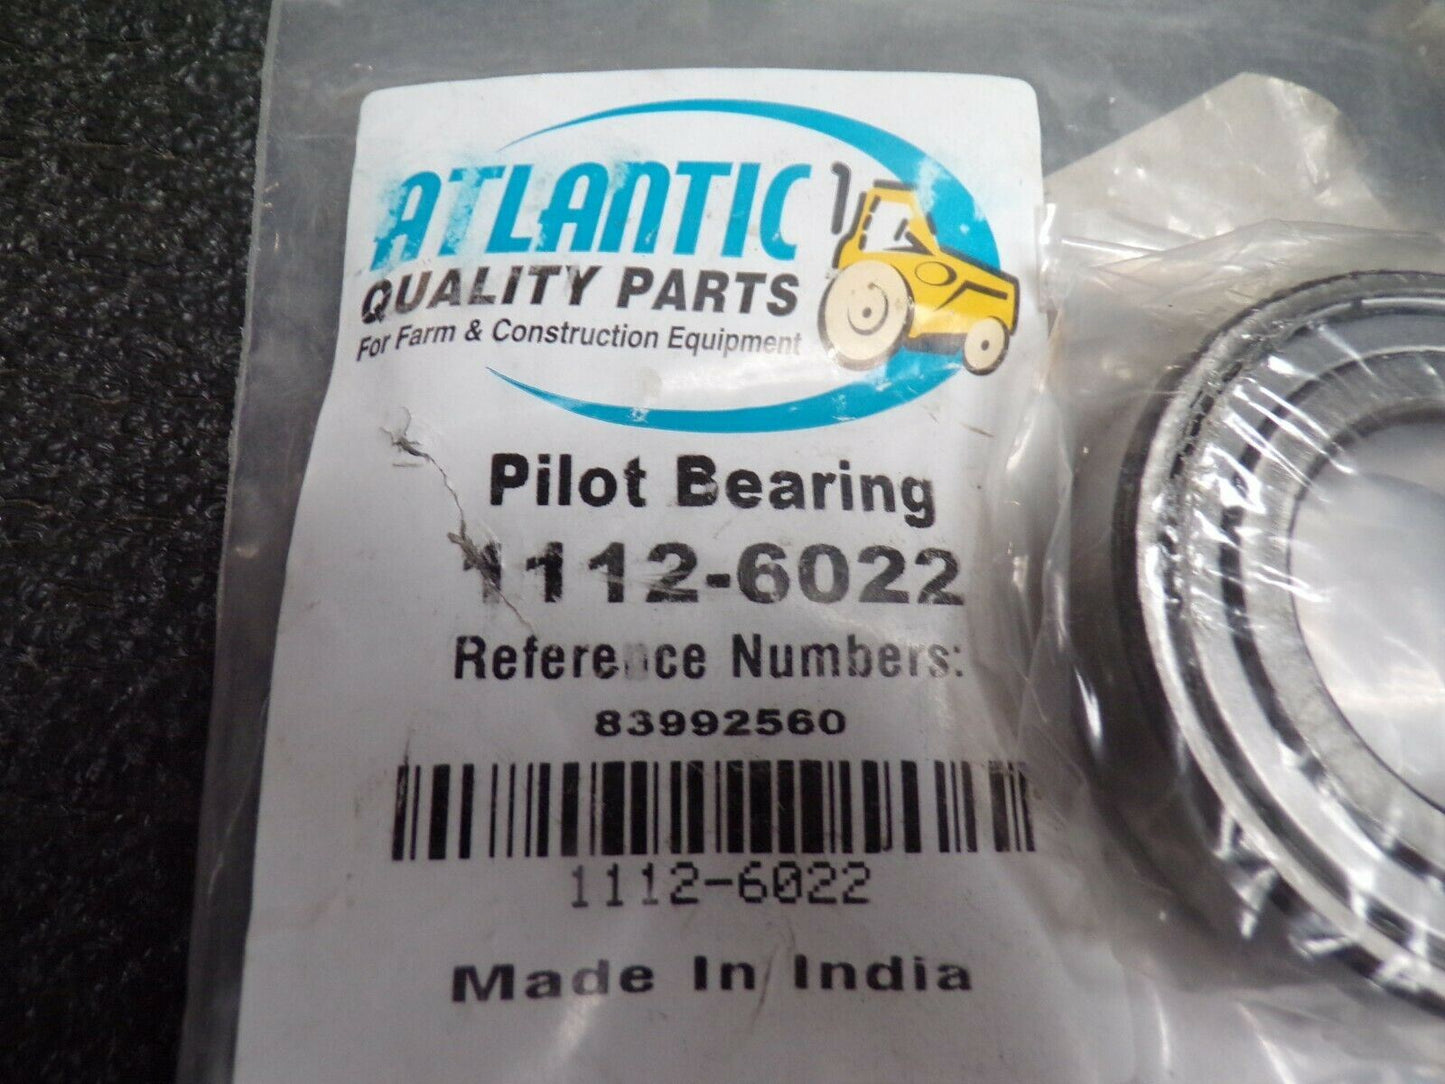 Pilot Bearing Ford/New Holland P/N 1112-6022 (184466621101-BT26)